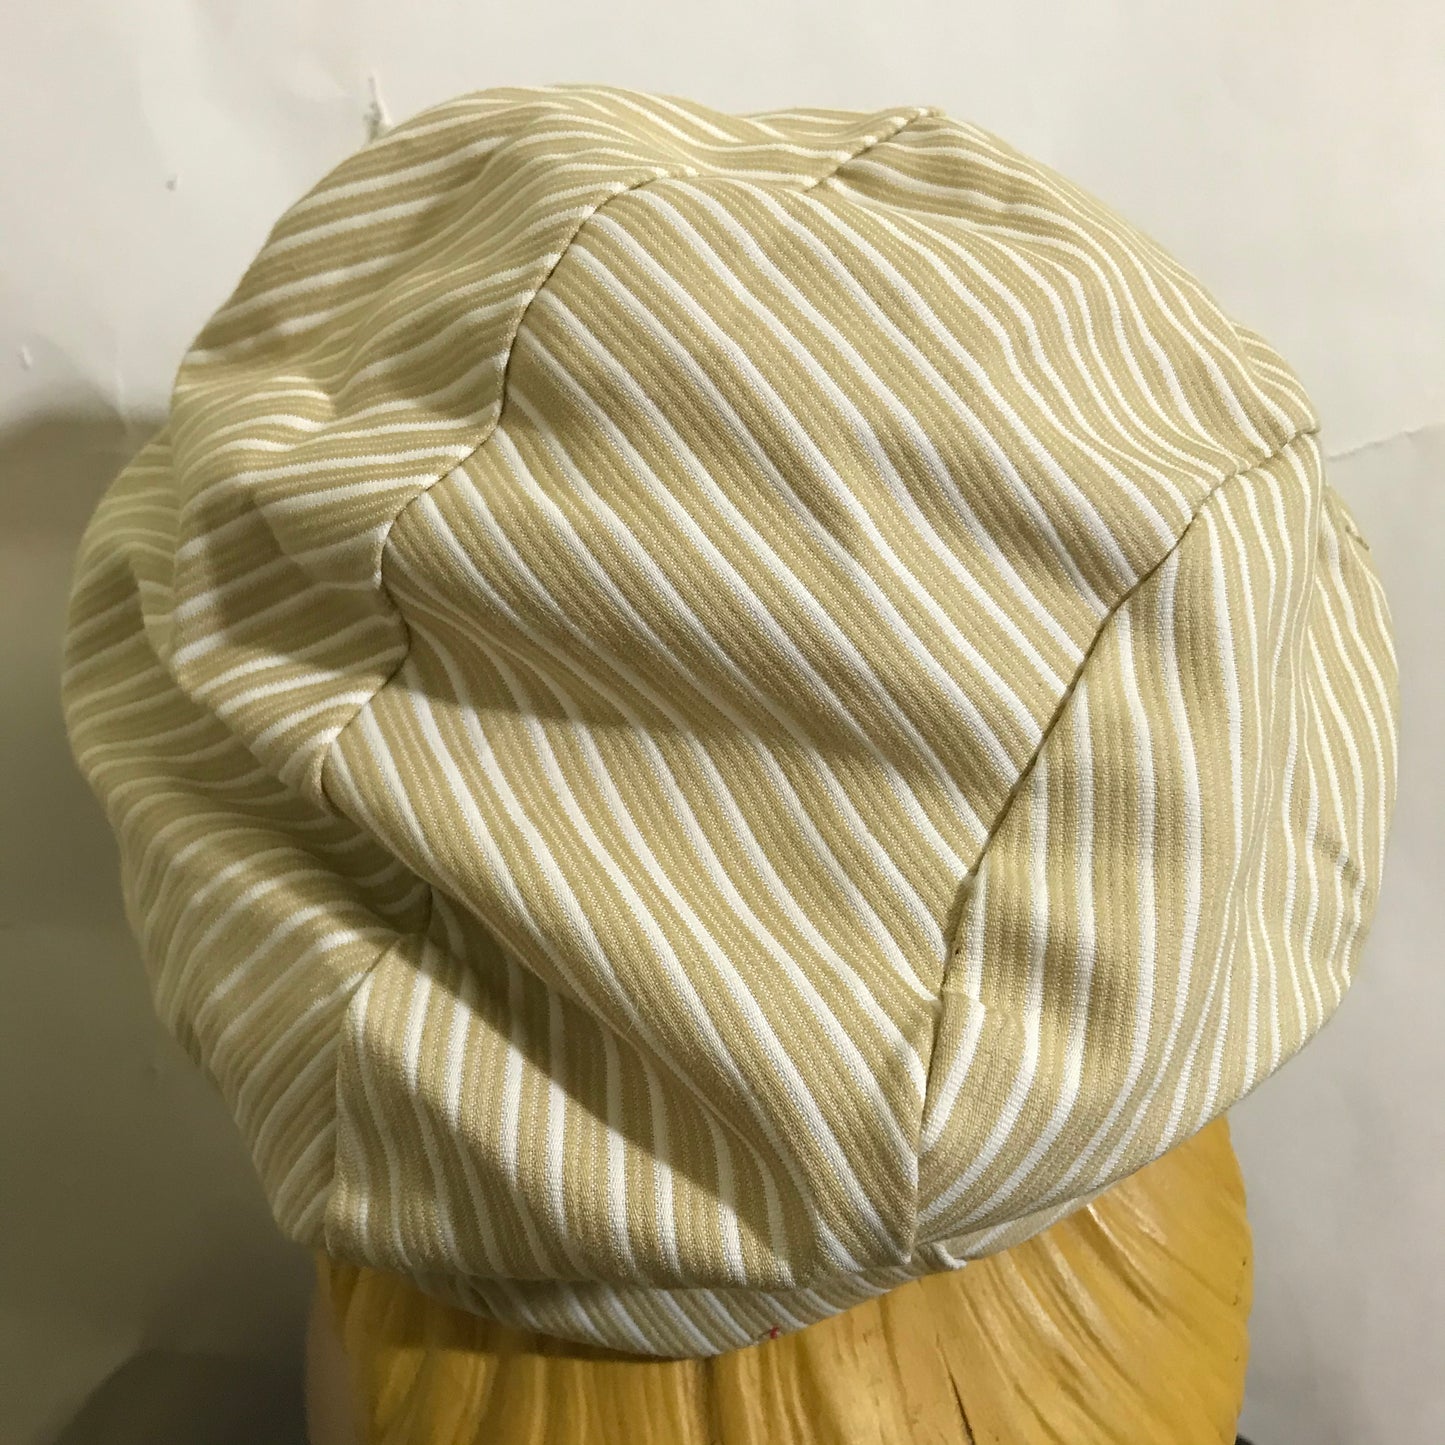 Stylish Tan and White Striped Fabric Hat and Handbag with Black Patent Vinyl Trim circa 1960s